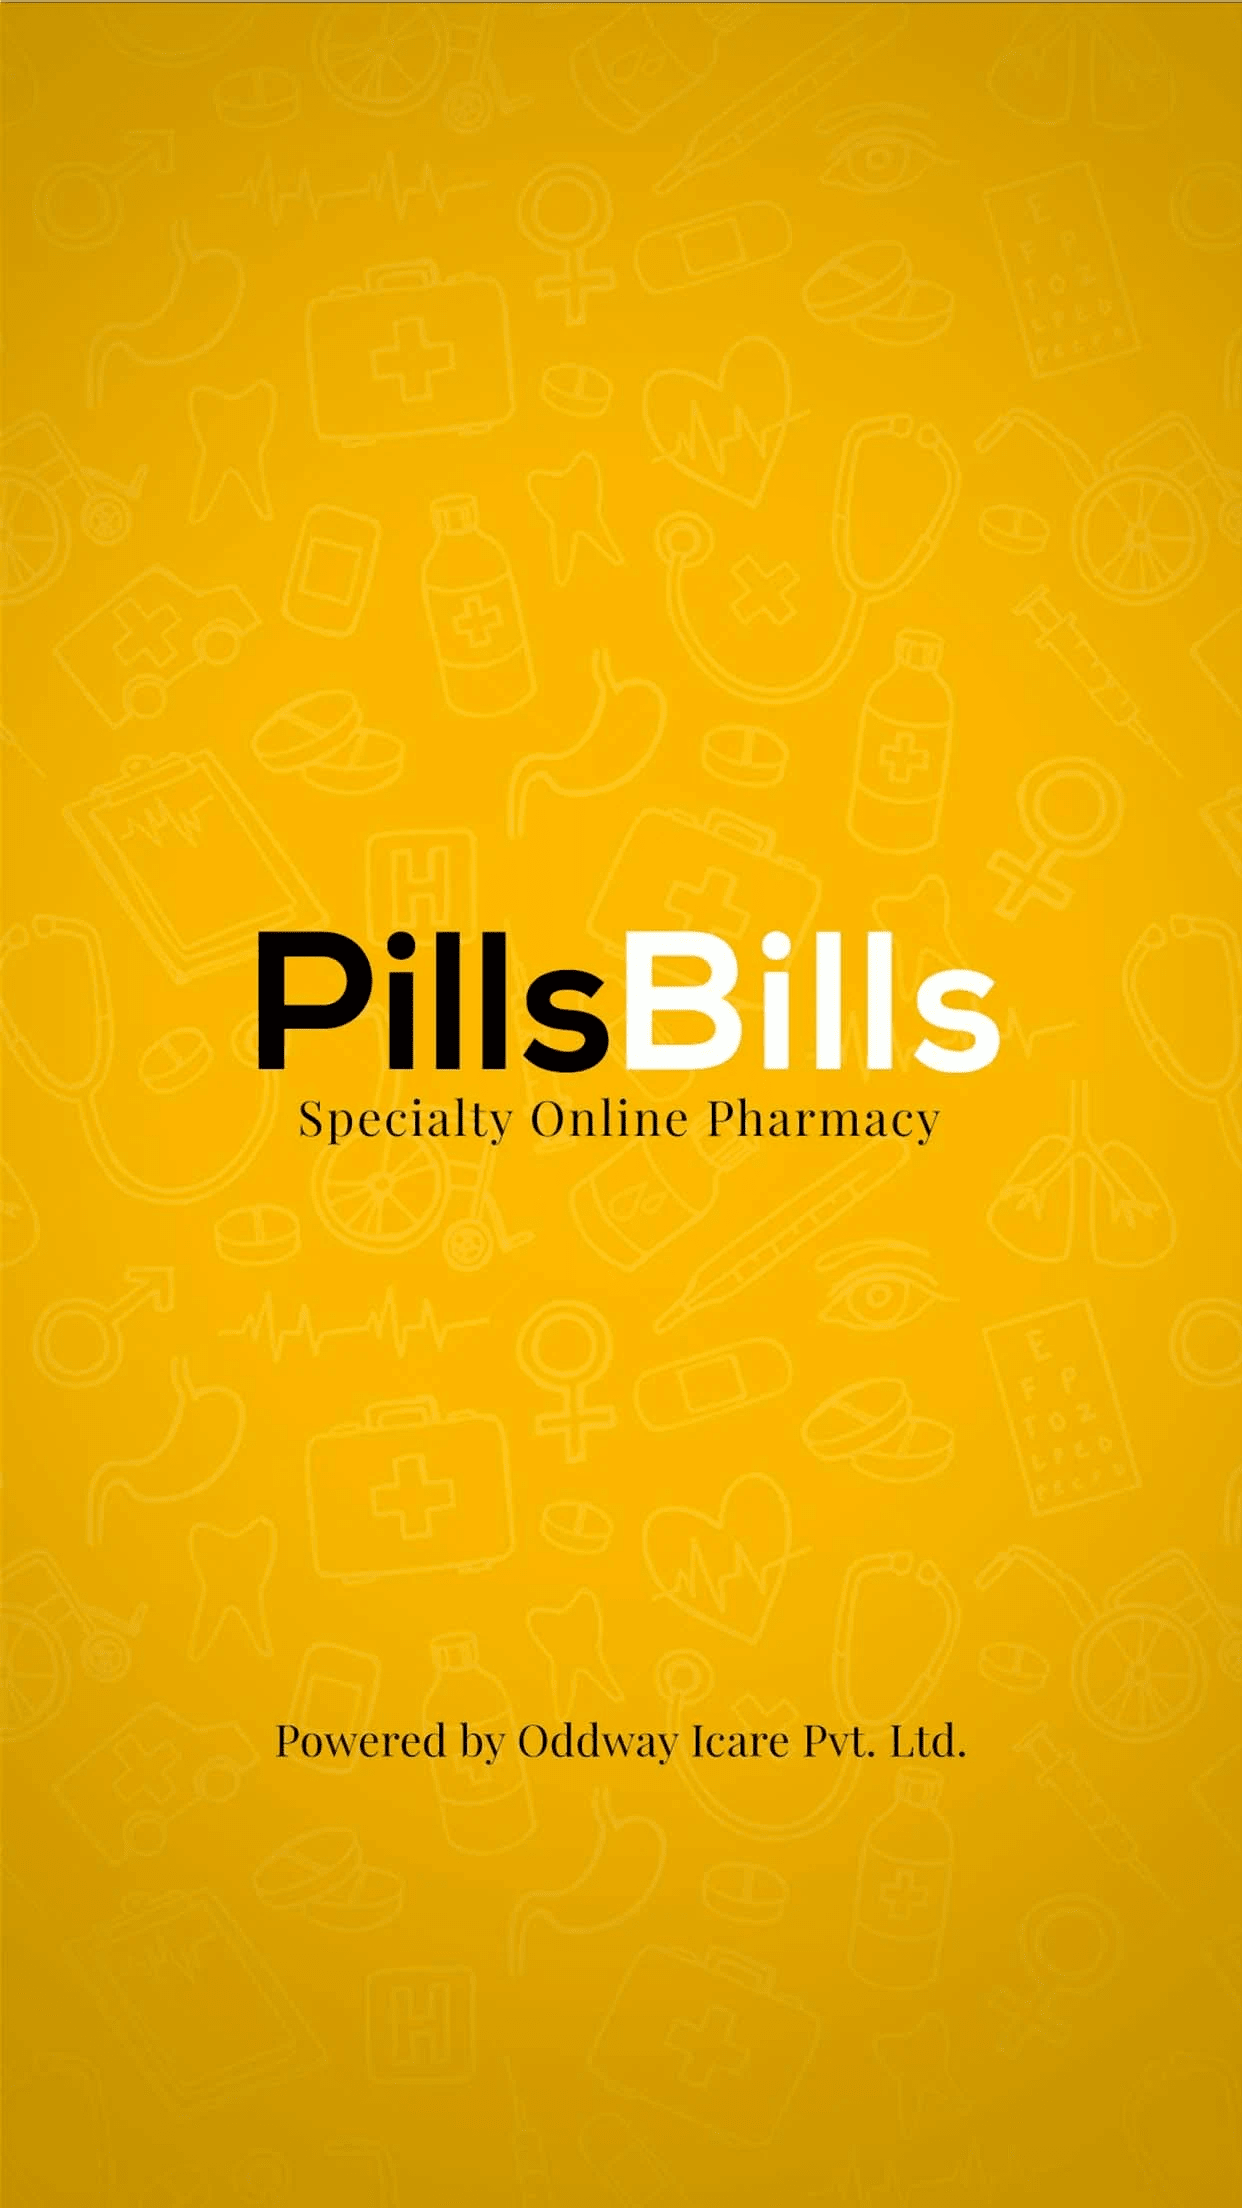 PillsBills - Specialty Online Pharmacy